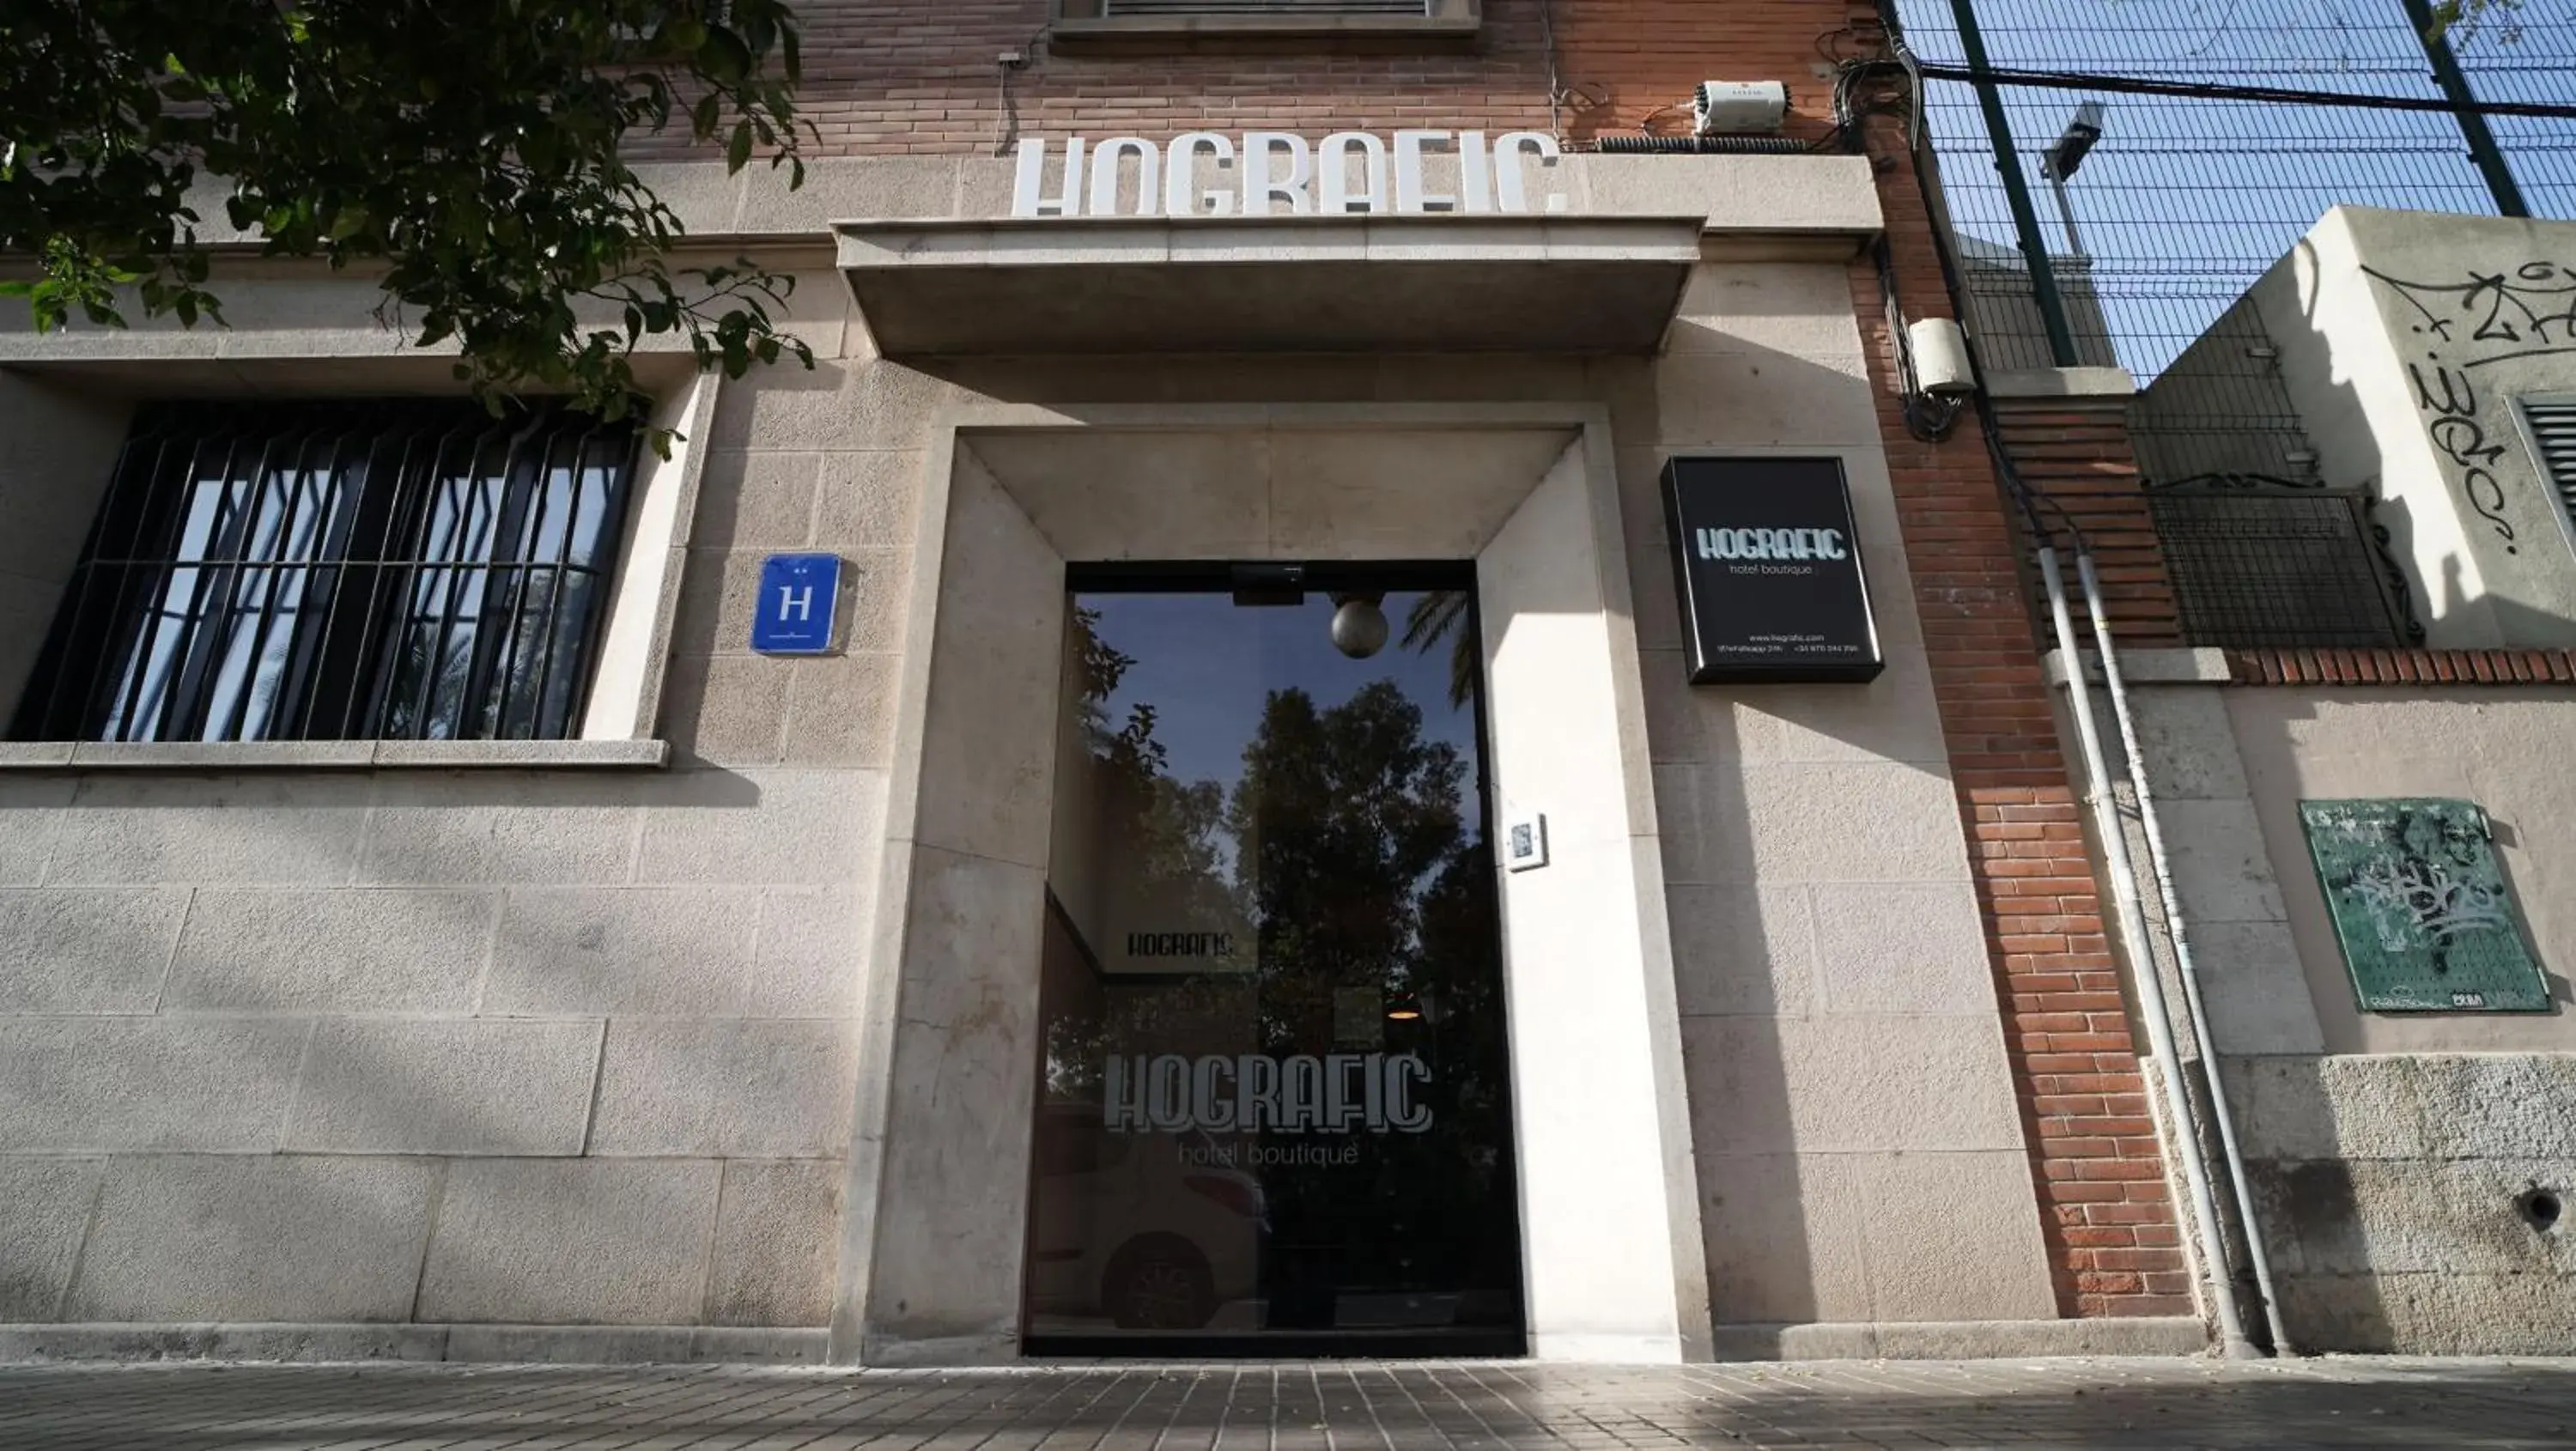 Facade/entrance, Property Building in HoGraFic hotel boutique